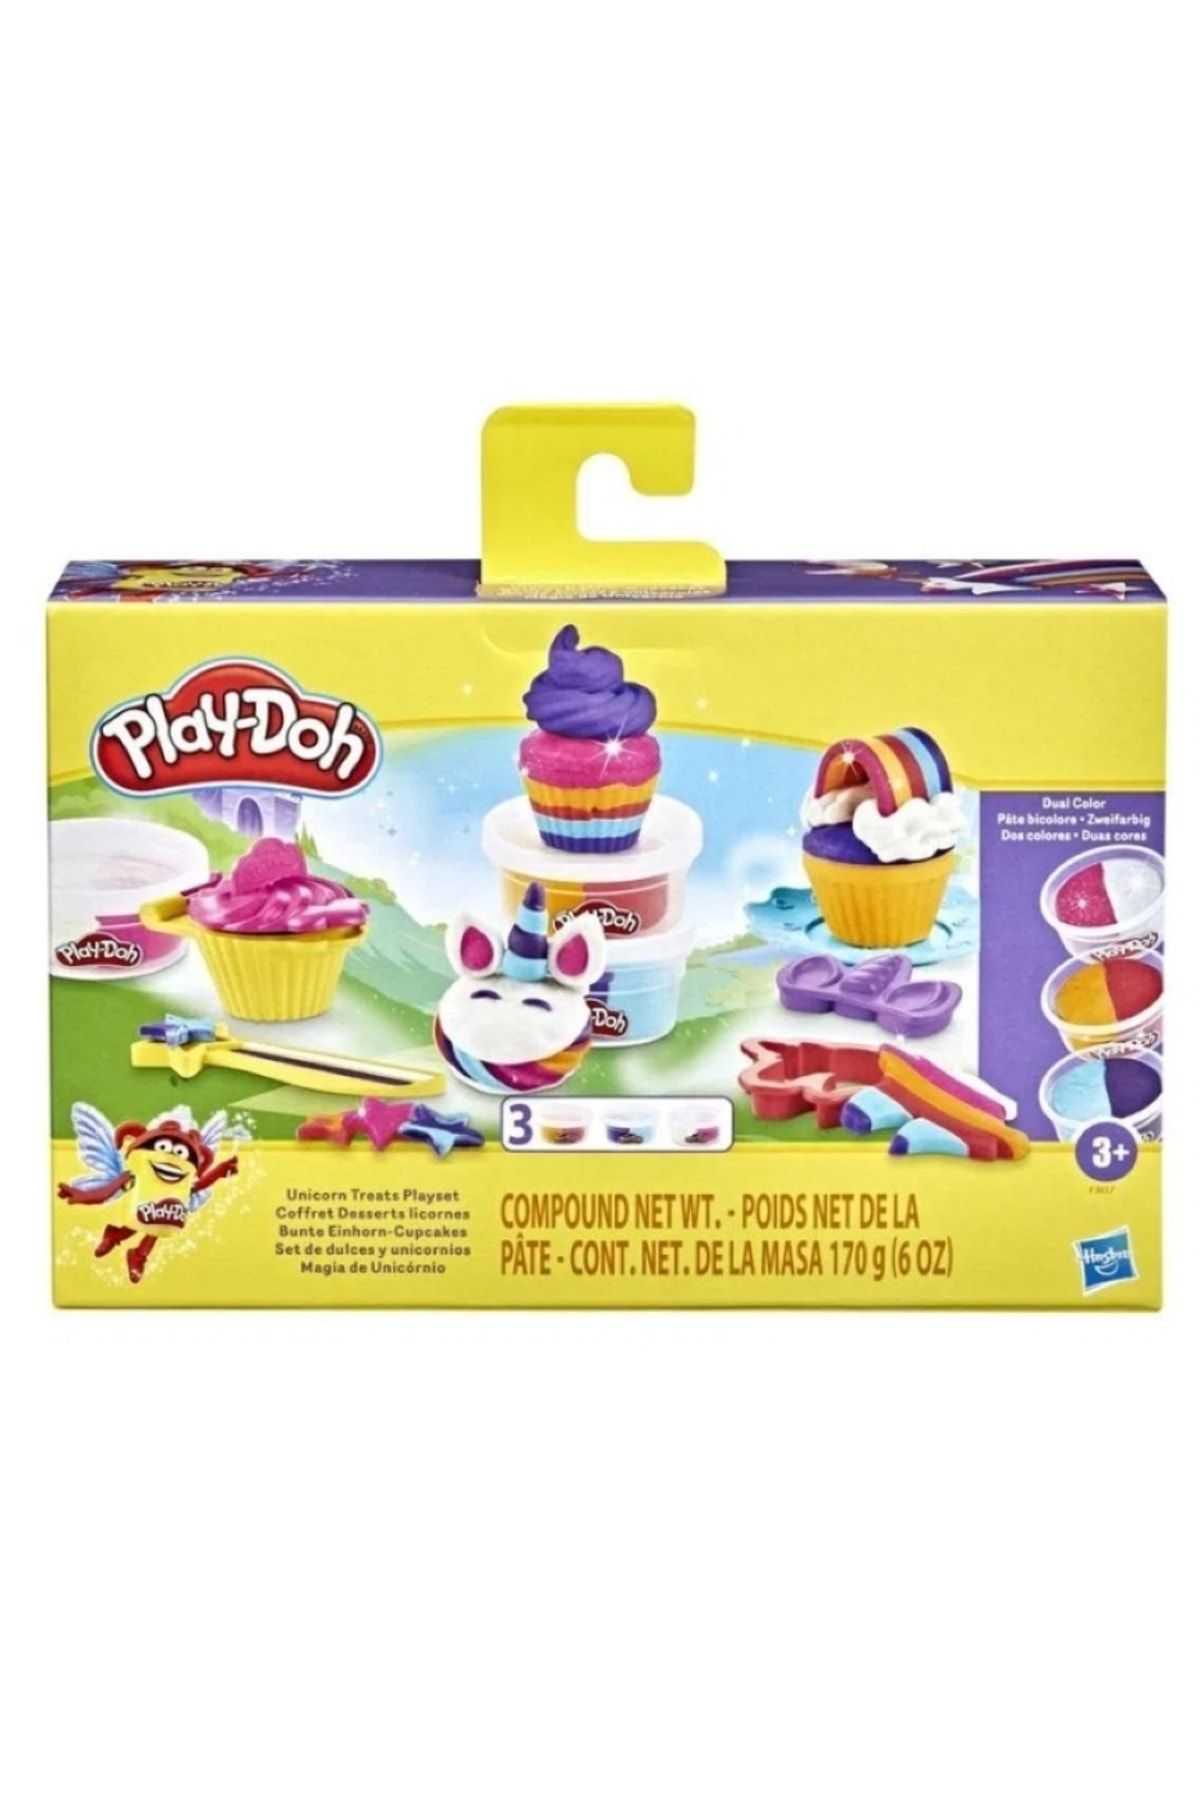 Play Doh Play-doh Mini Unıcorn Öğretici Oyun Seti 20*13